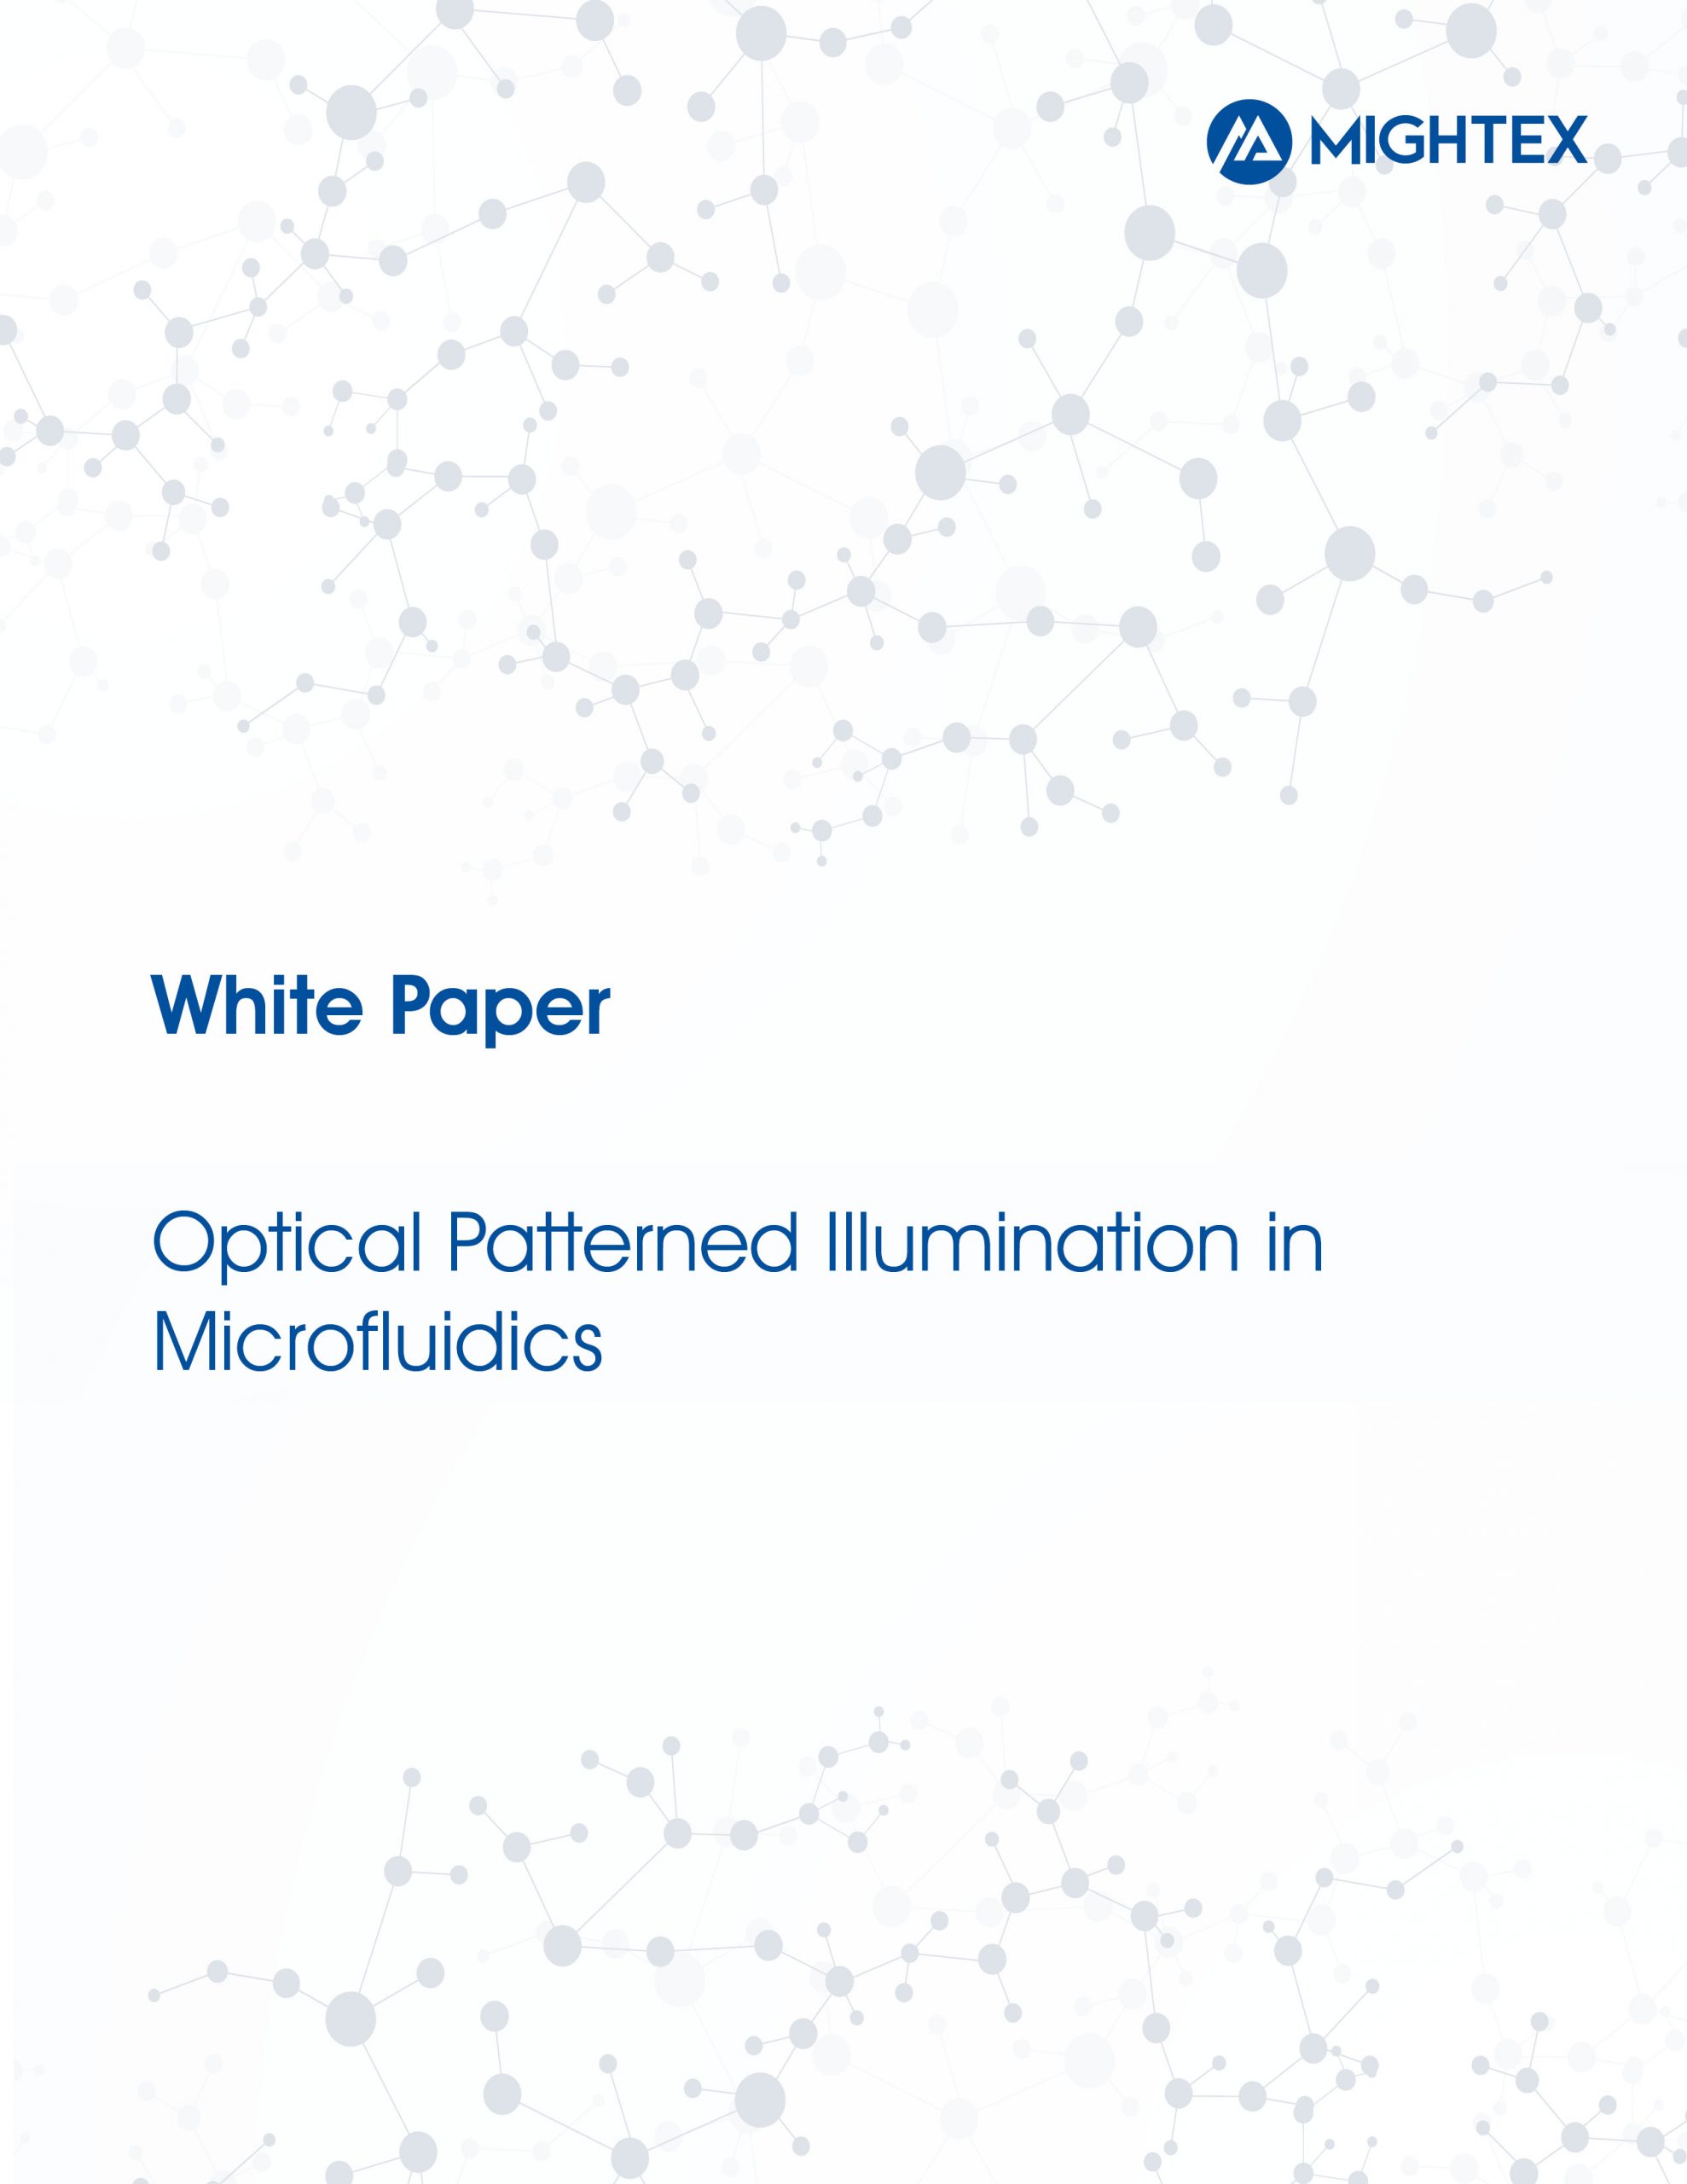 microfluidics_whitepaper